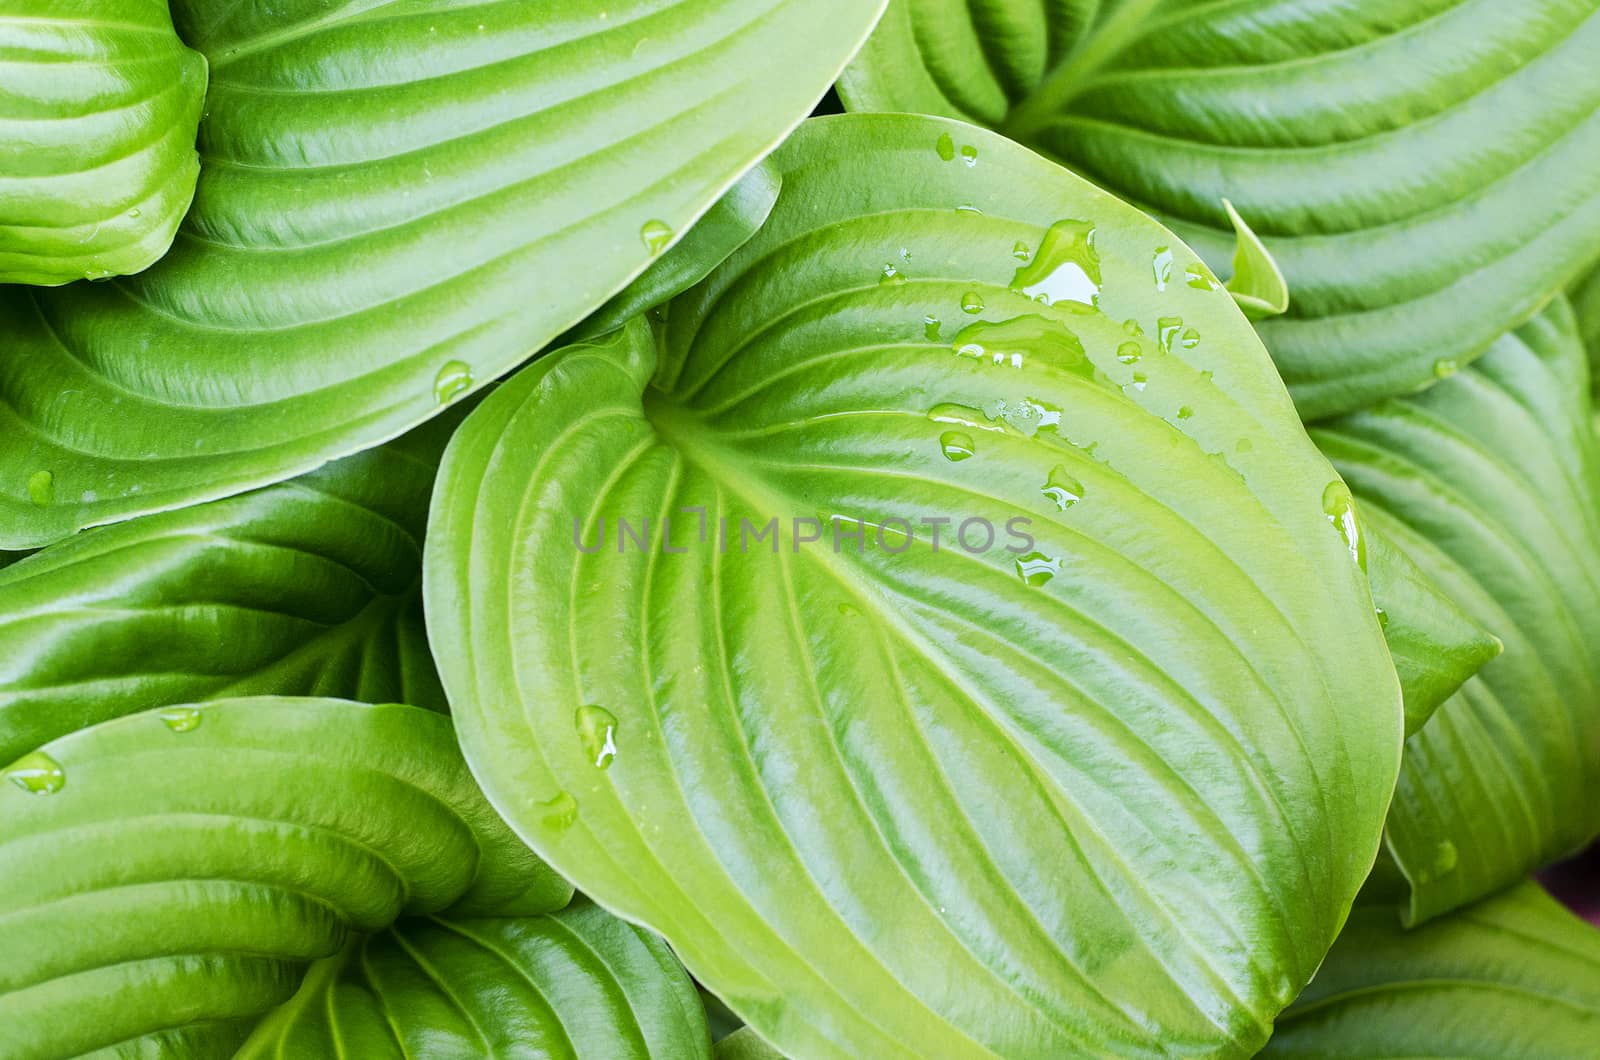 Water drops of hosta leaf by eenevski